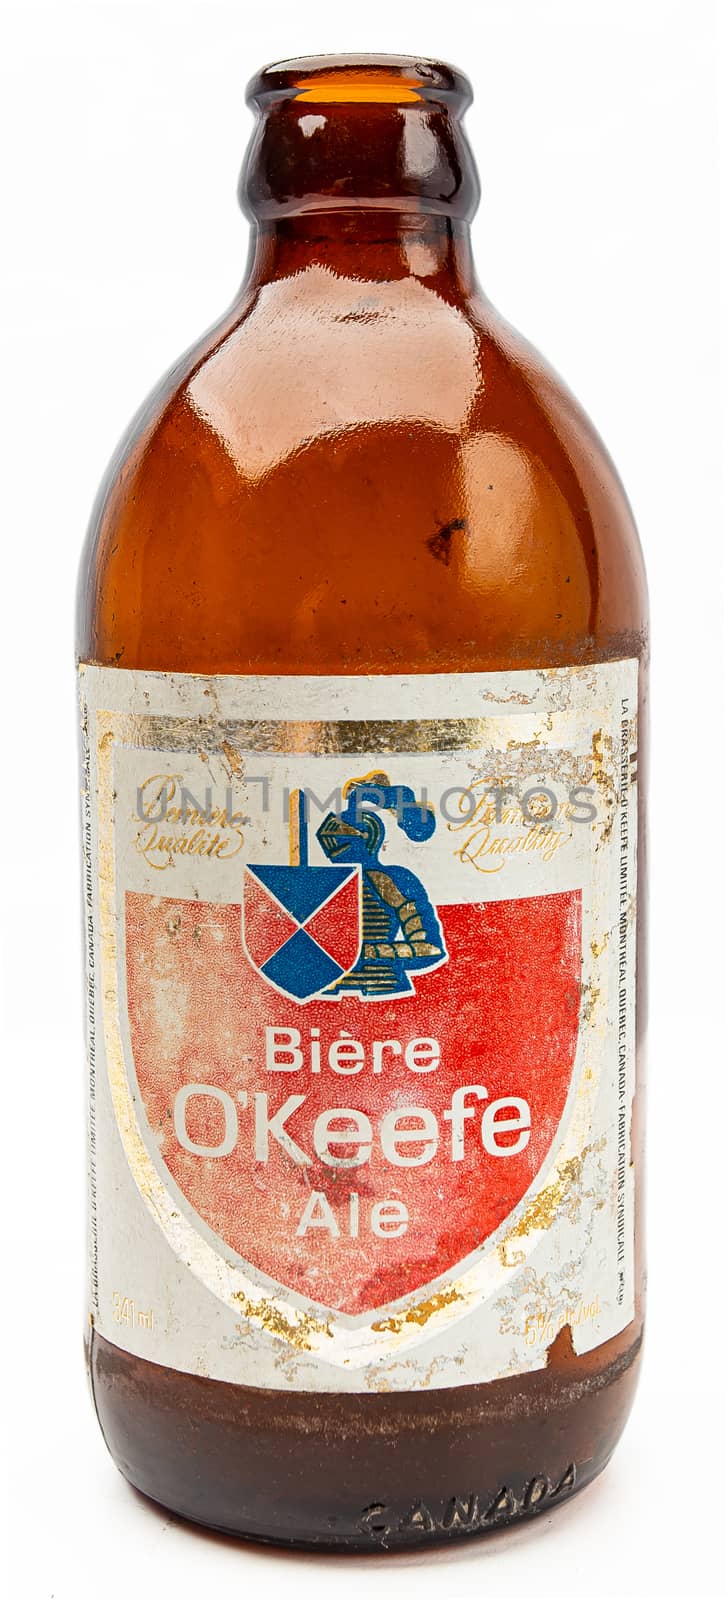 Vintage O'keefe bottle by mypstudio